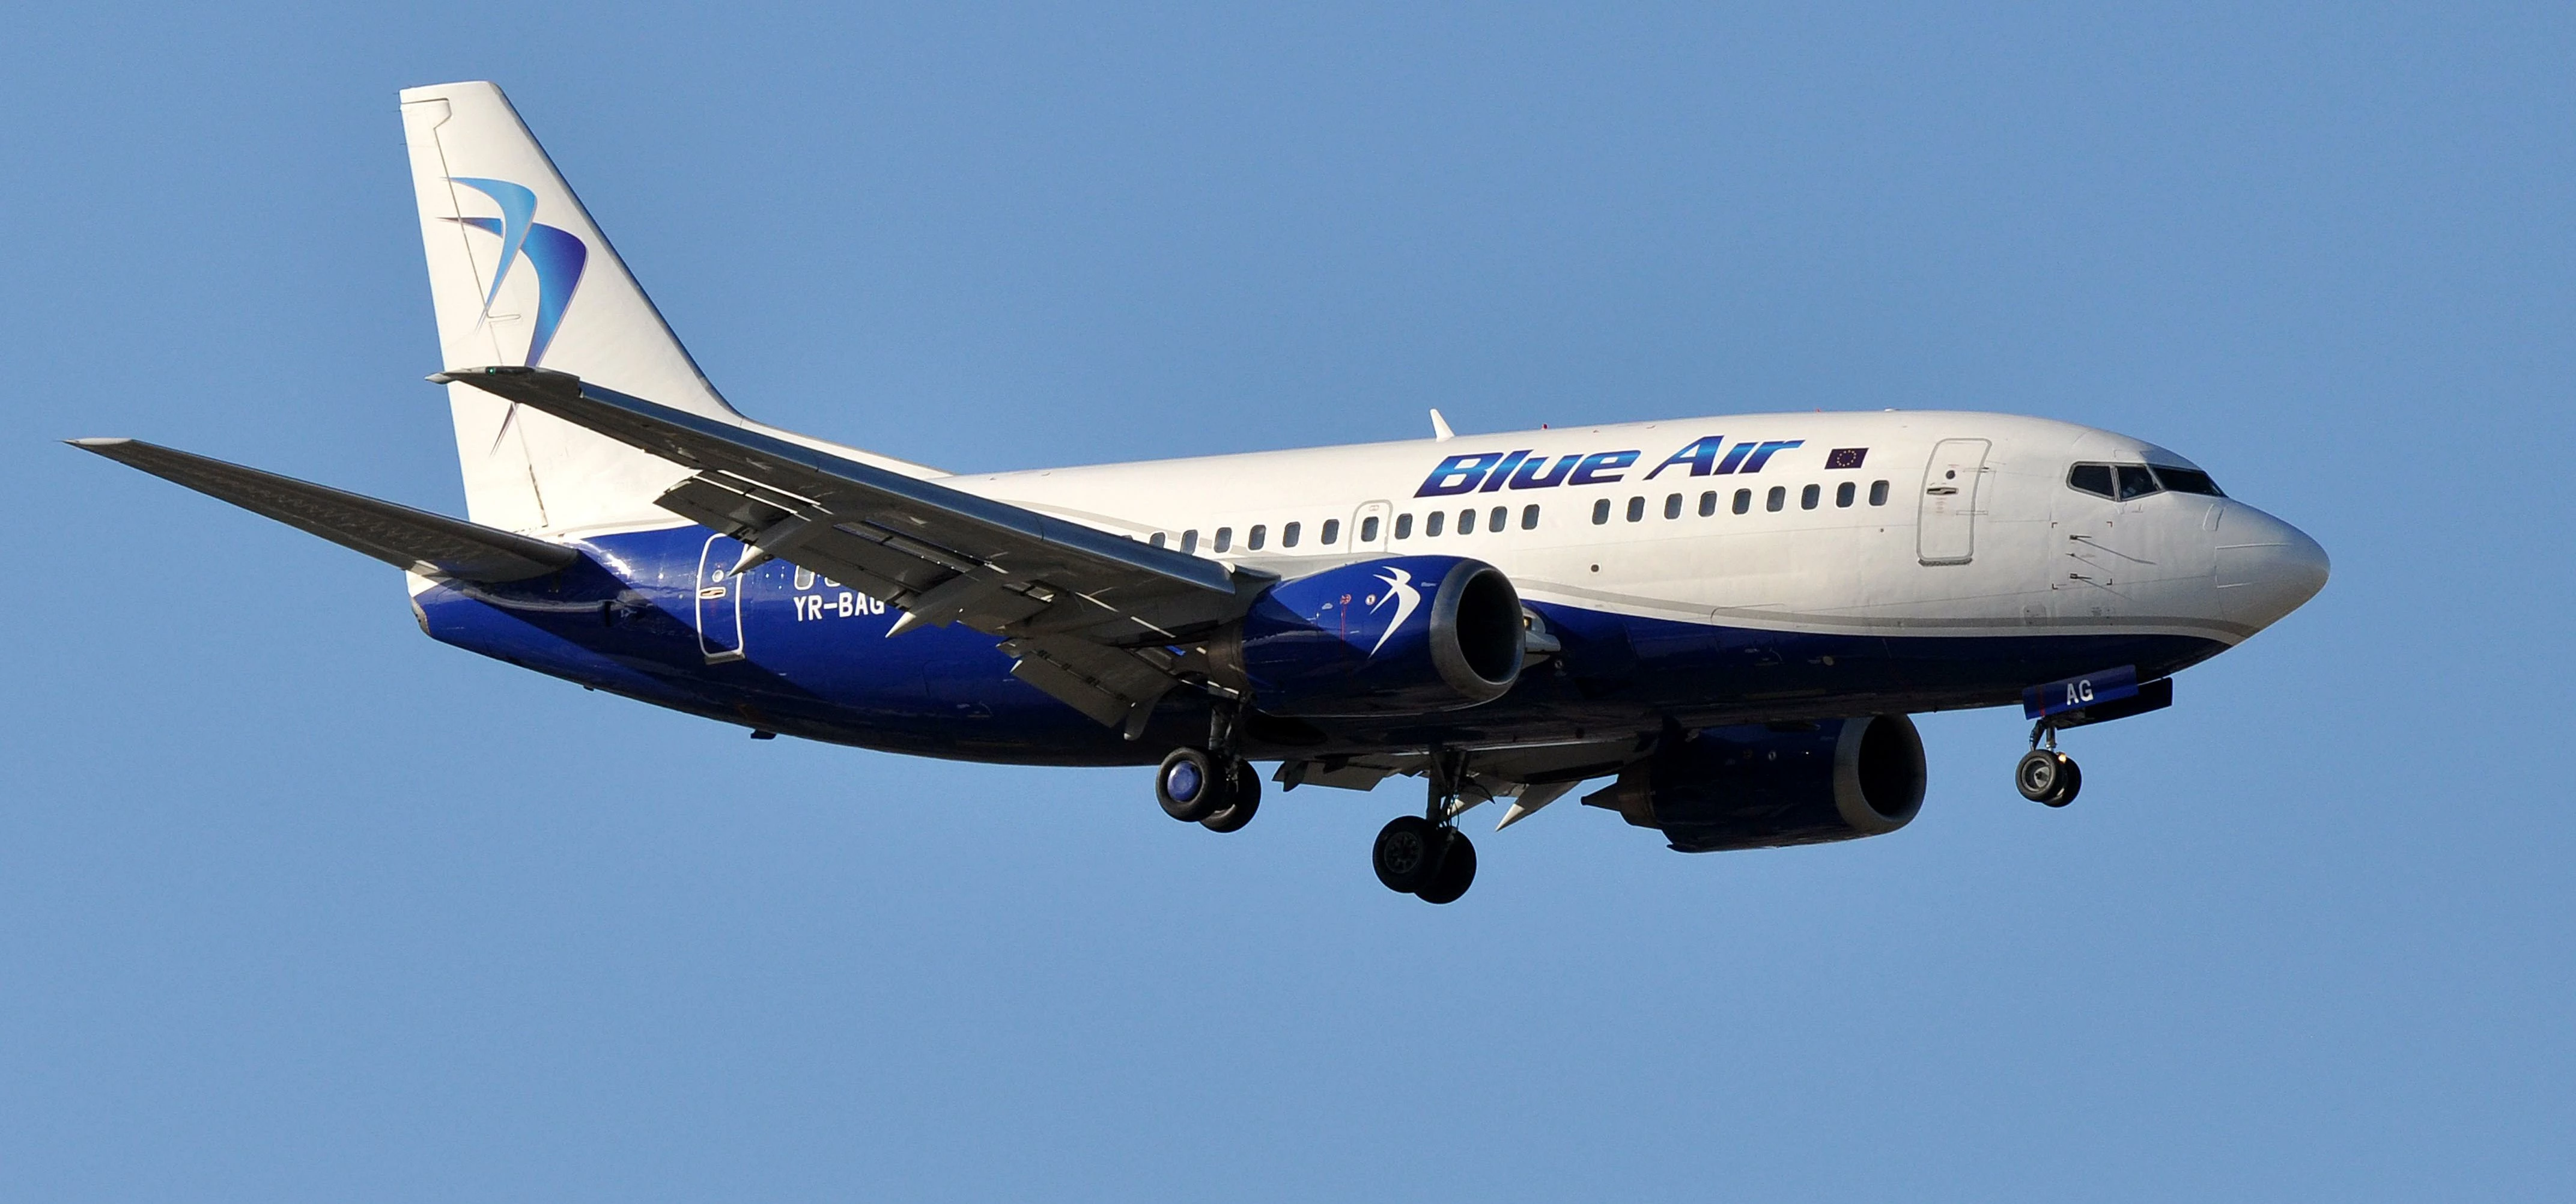 Blue Air has operated at John Lennon Airport since December 2014. Image: ERIC SALARD - Wikimedia Com